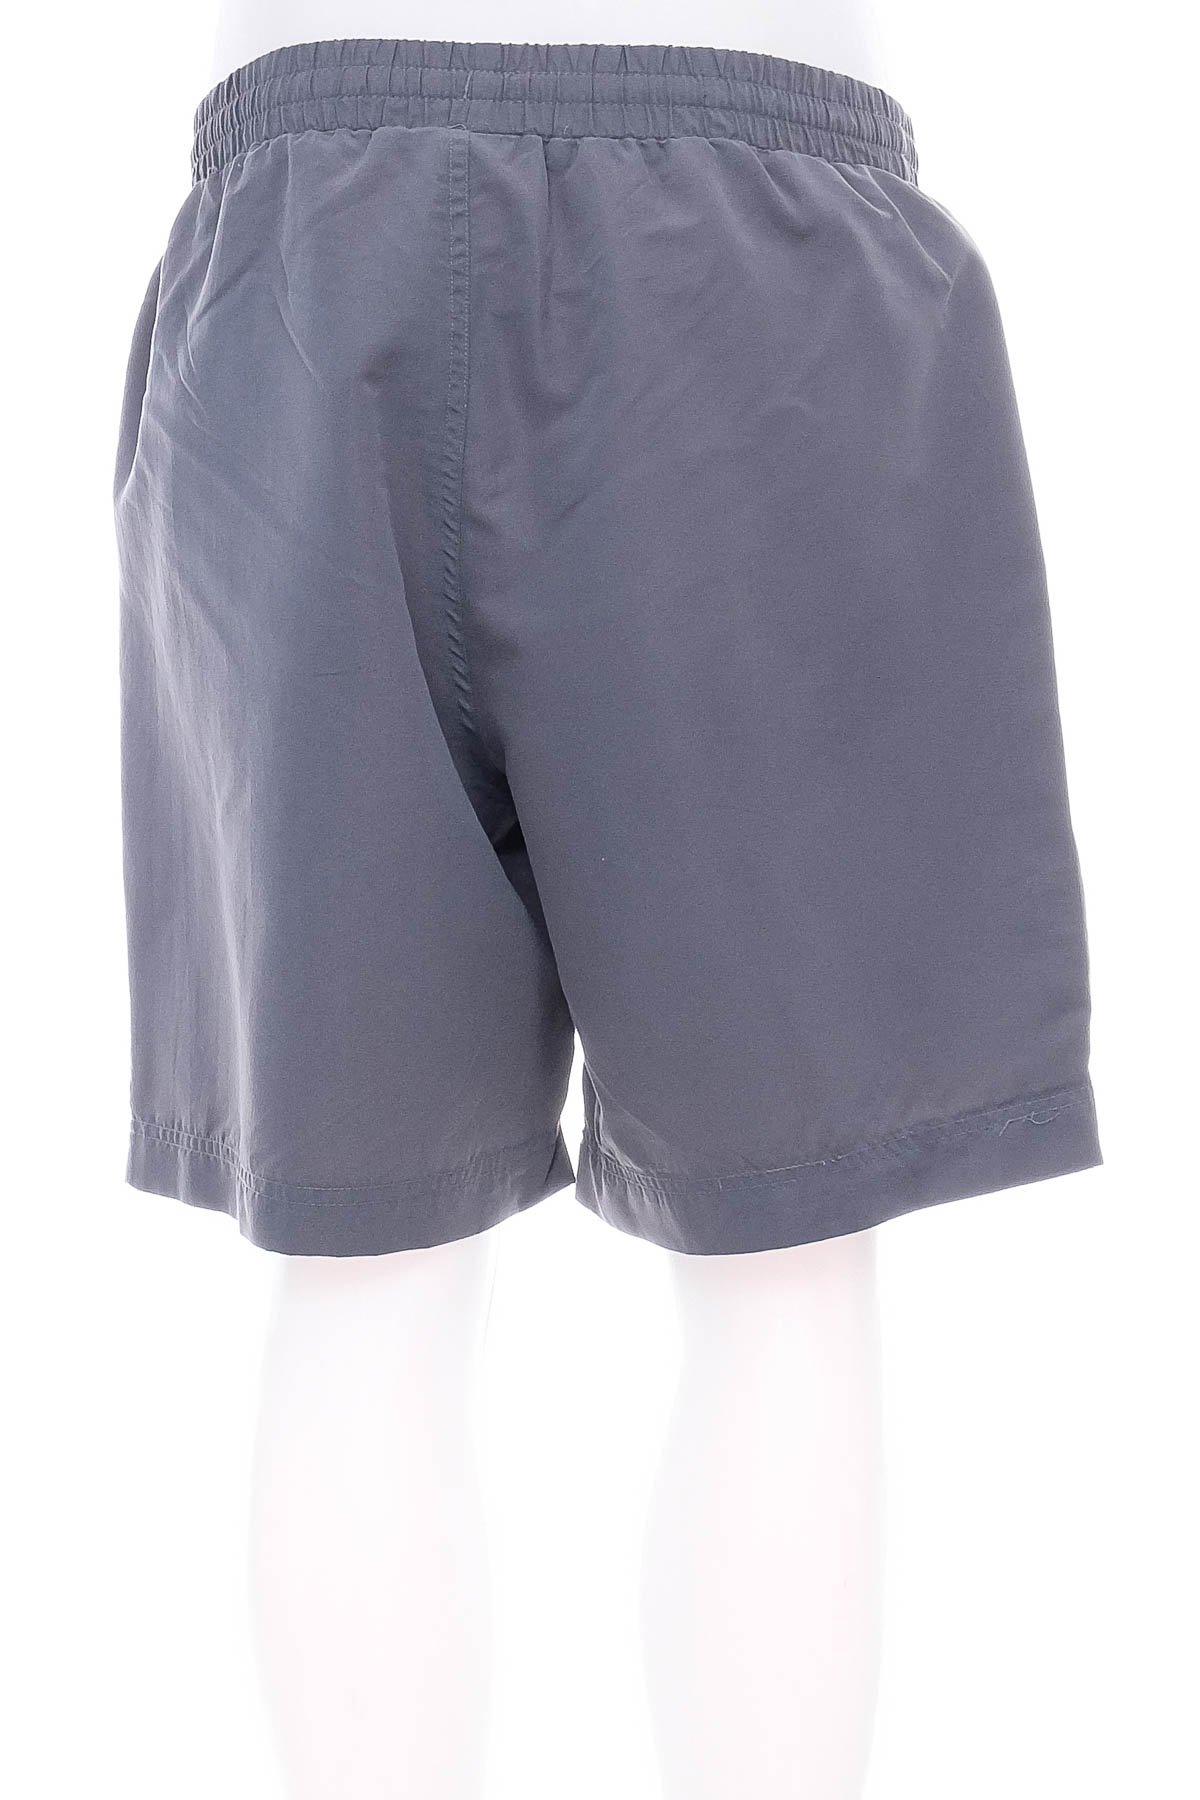 Men's shorts - Kappa - 1